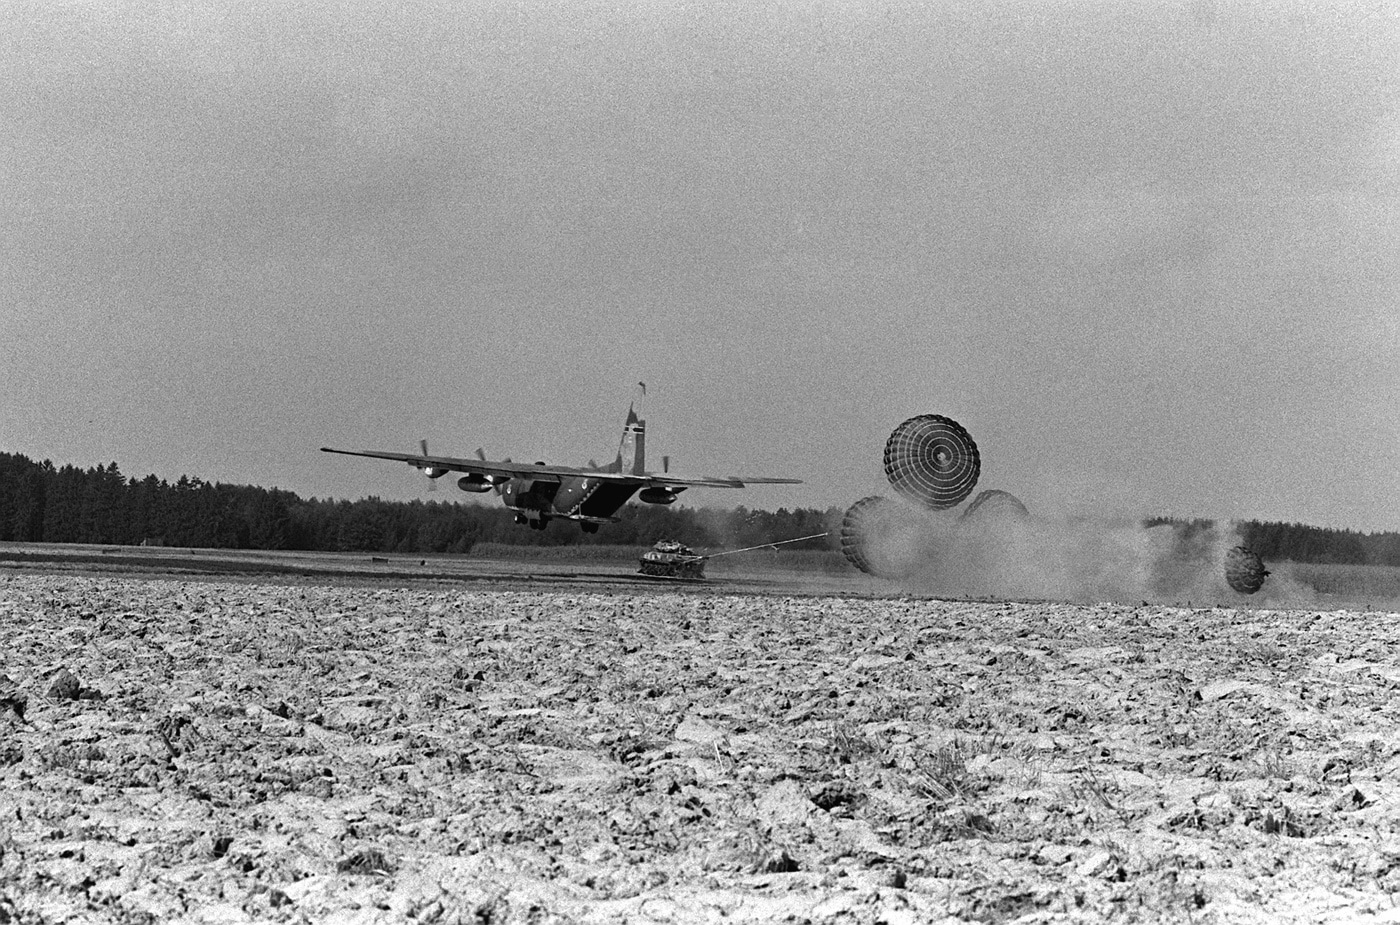 sheridan tank deploys from a c-130